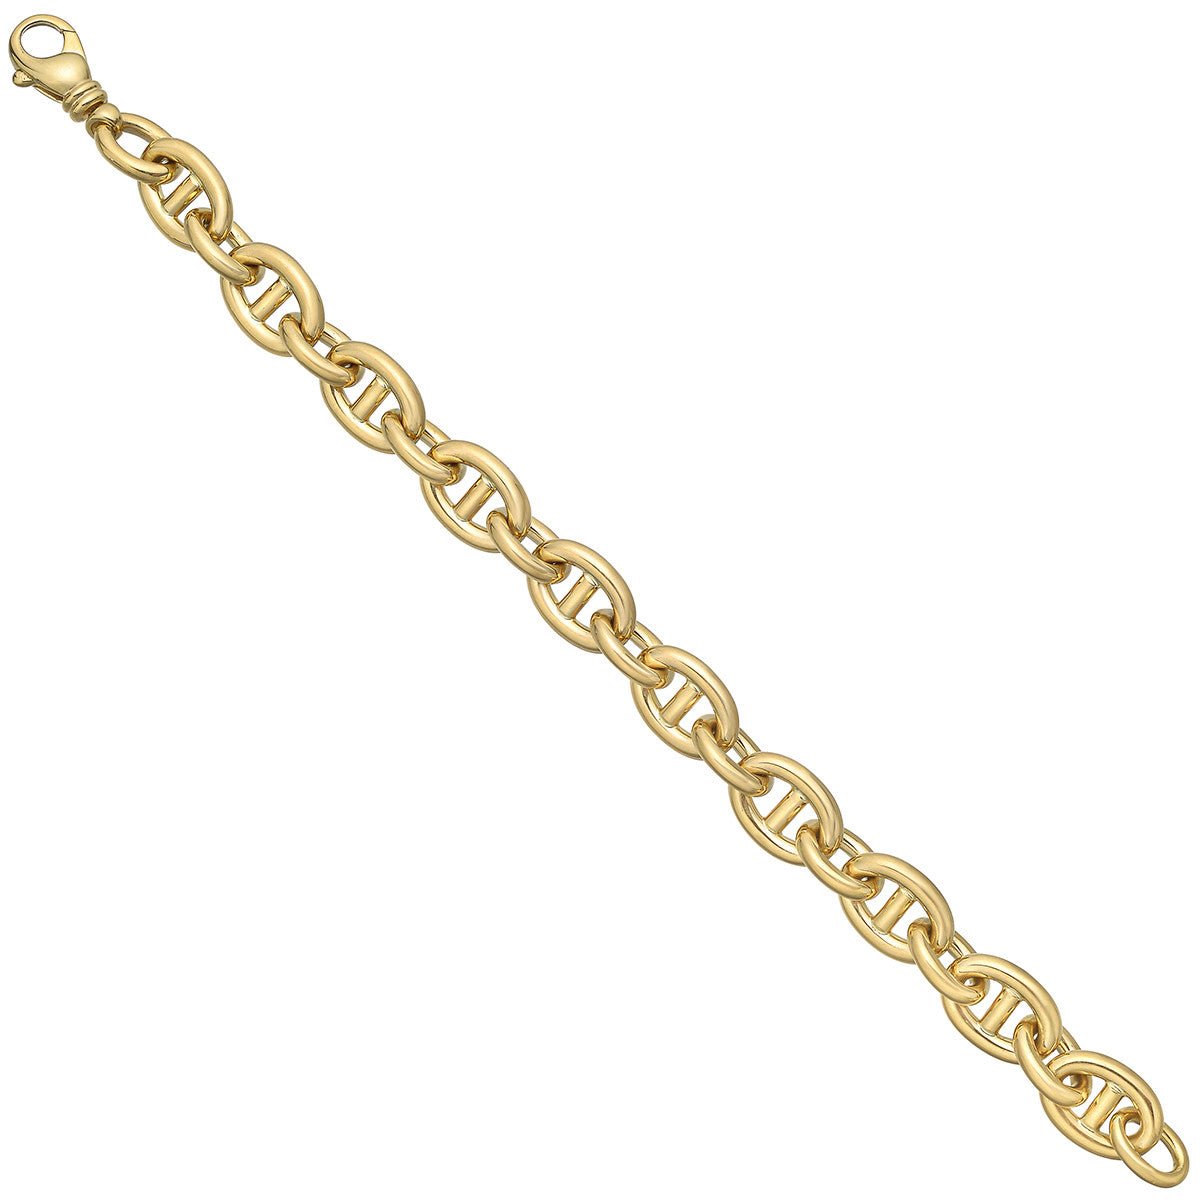 Greenleaf & Crosby - 18k Yellow Gold Anchor Link Bracelet